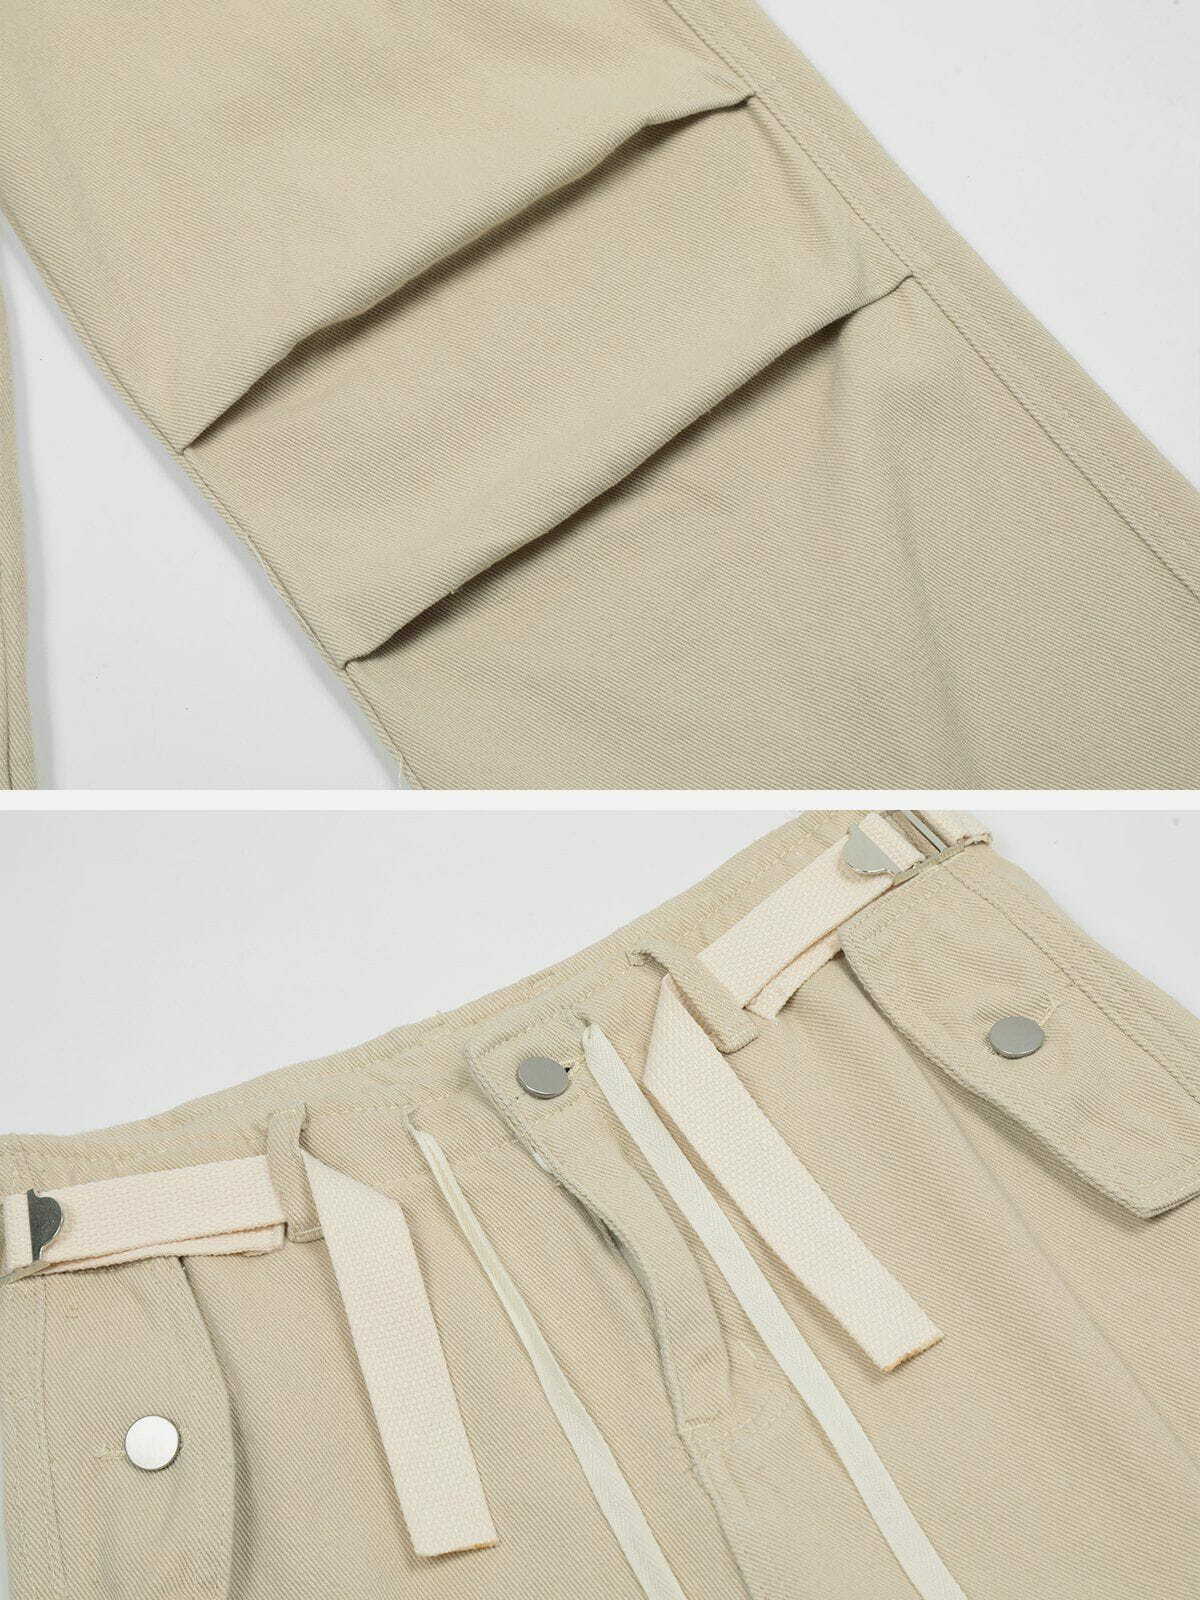 retro wideleg cargo pants edgy & functional streetwear 2738